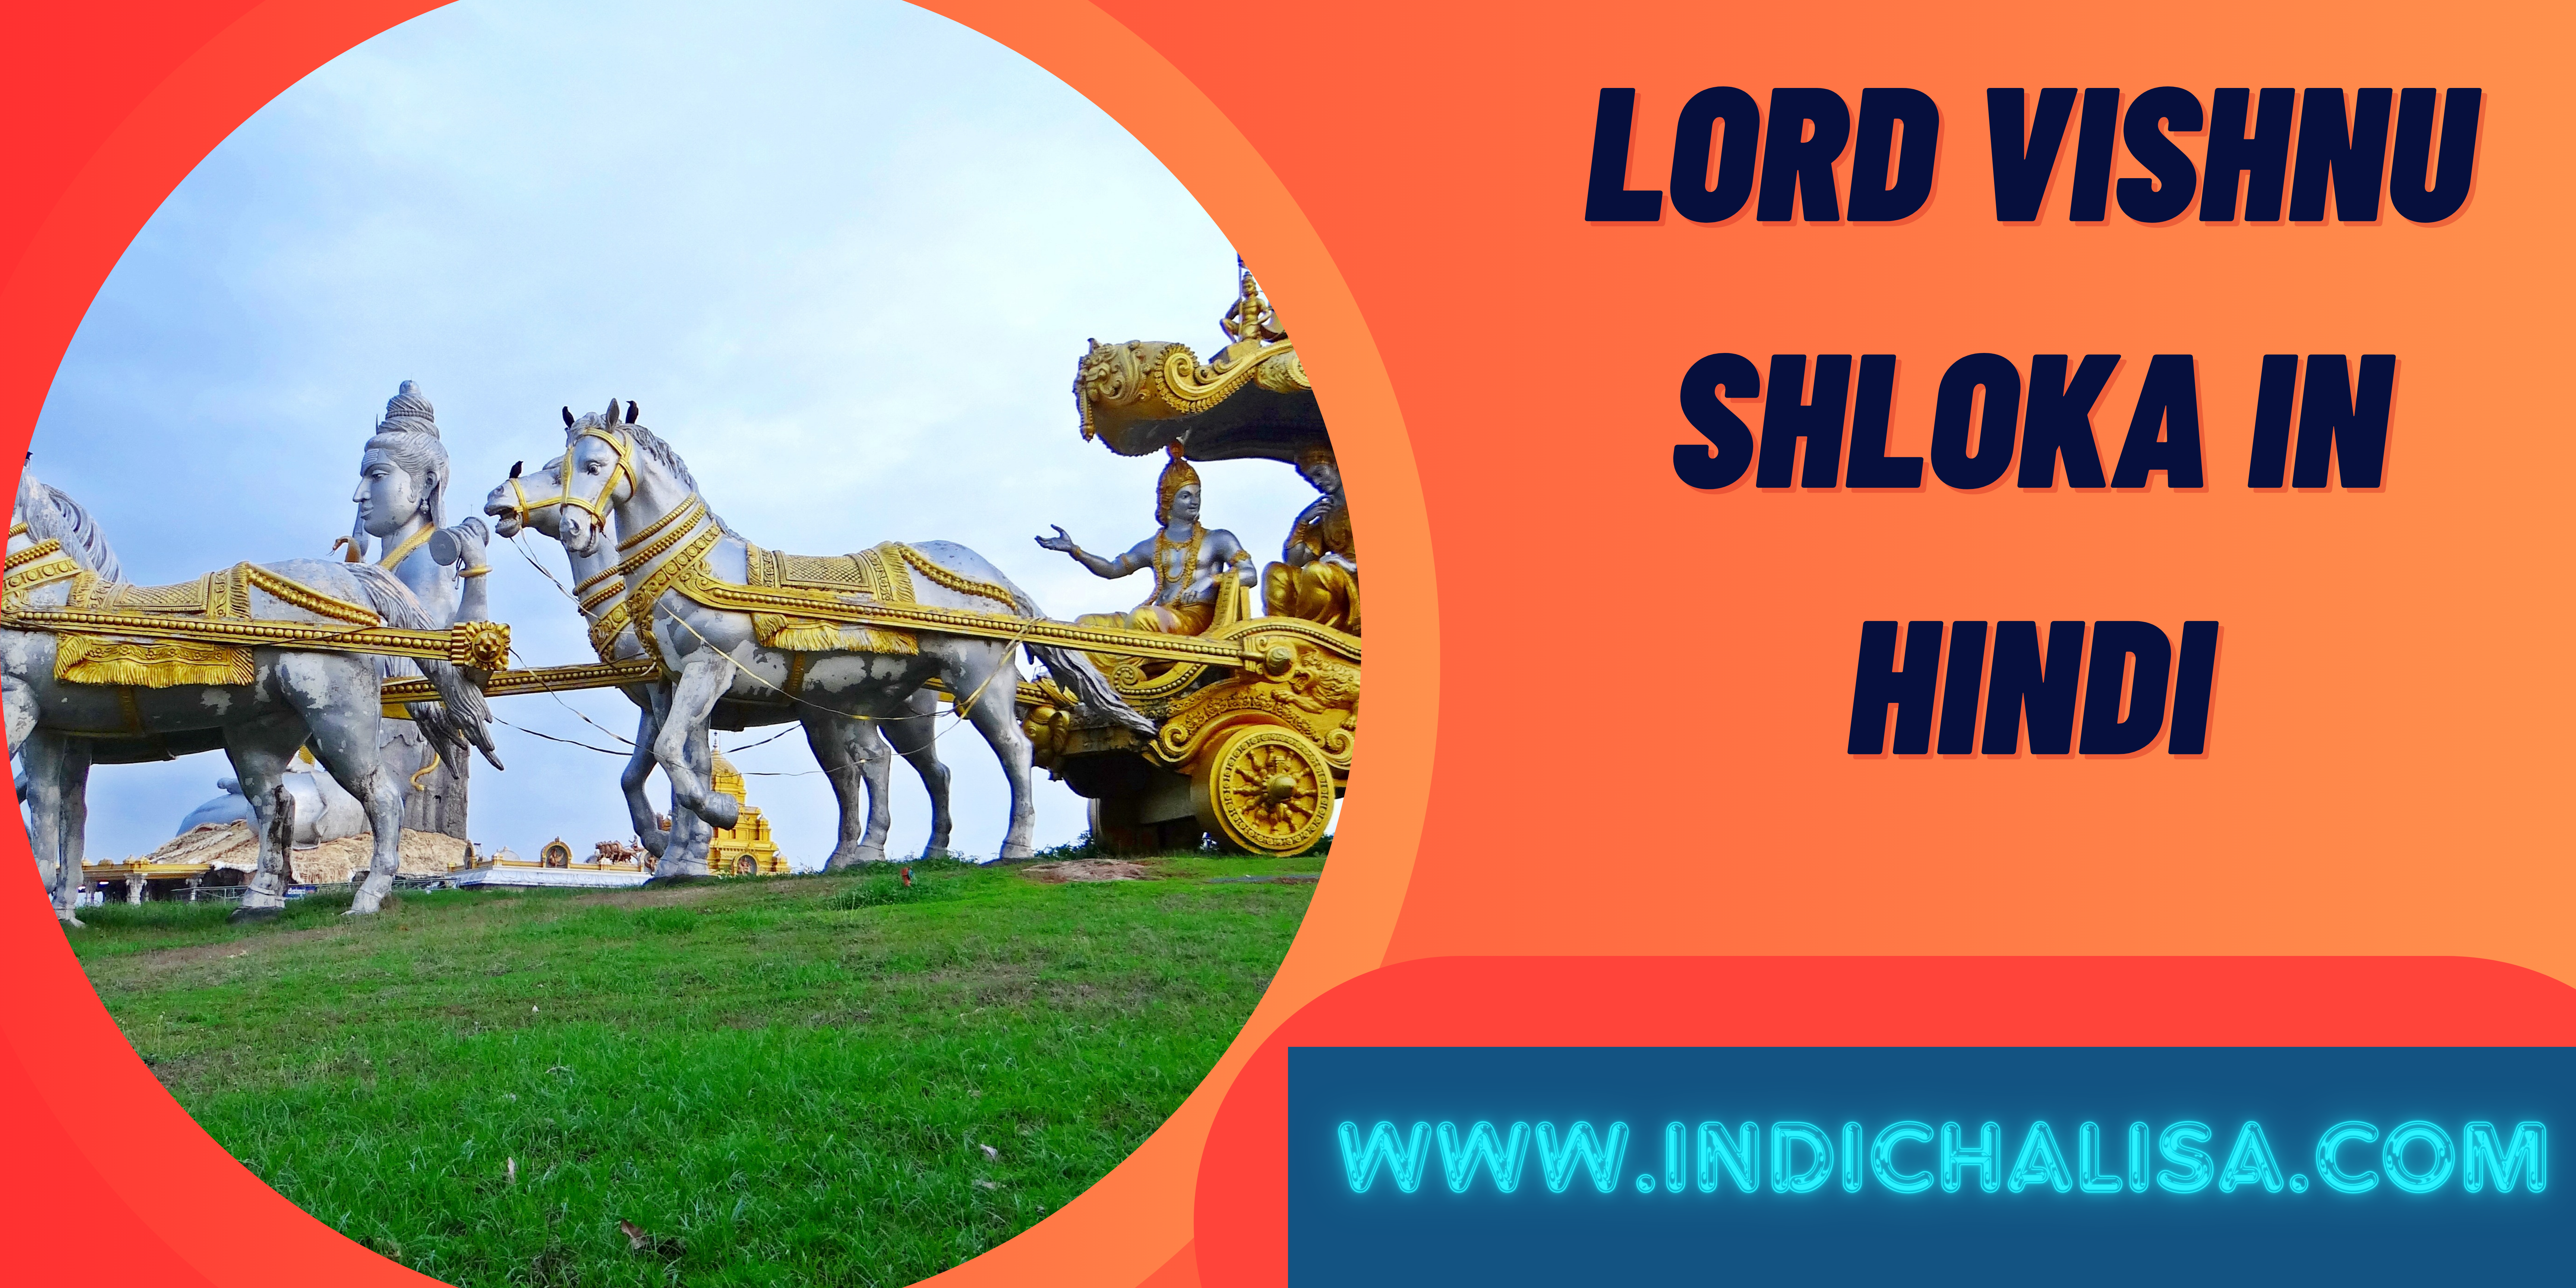 Lord Vishnu Shloka In Hindi|Lord Vishnu Shloka In Hindi|Indichalisa|Indichalisa